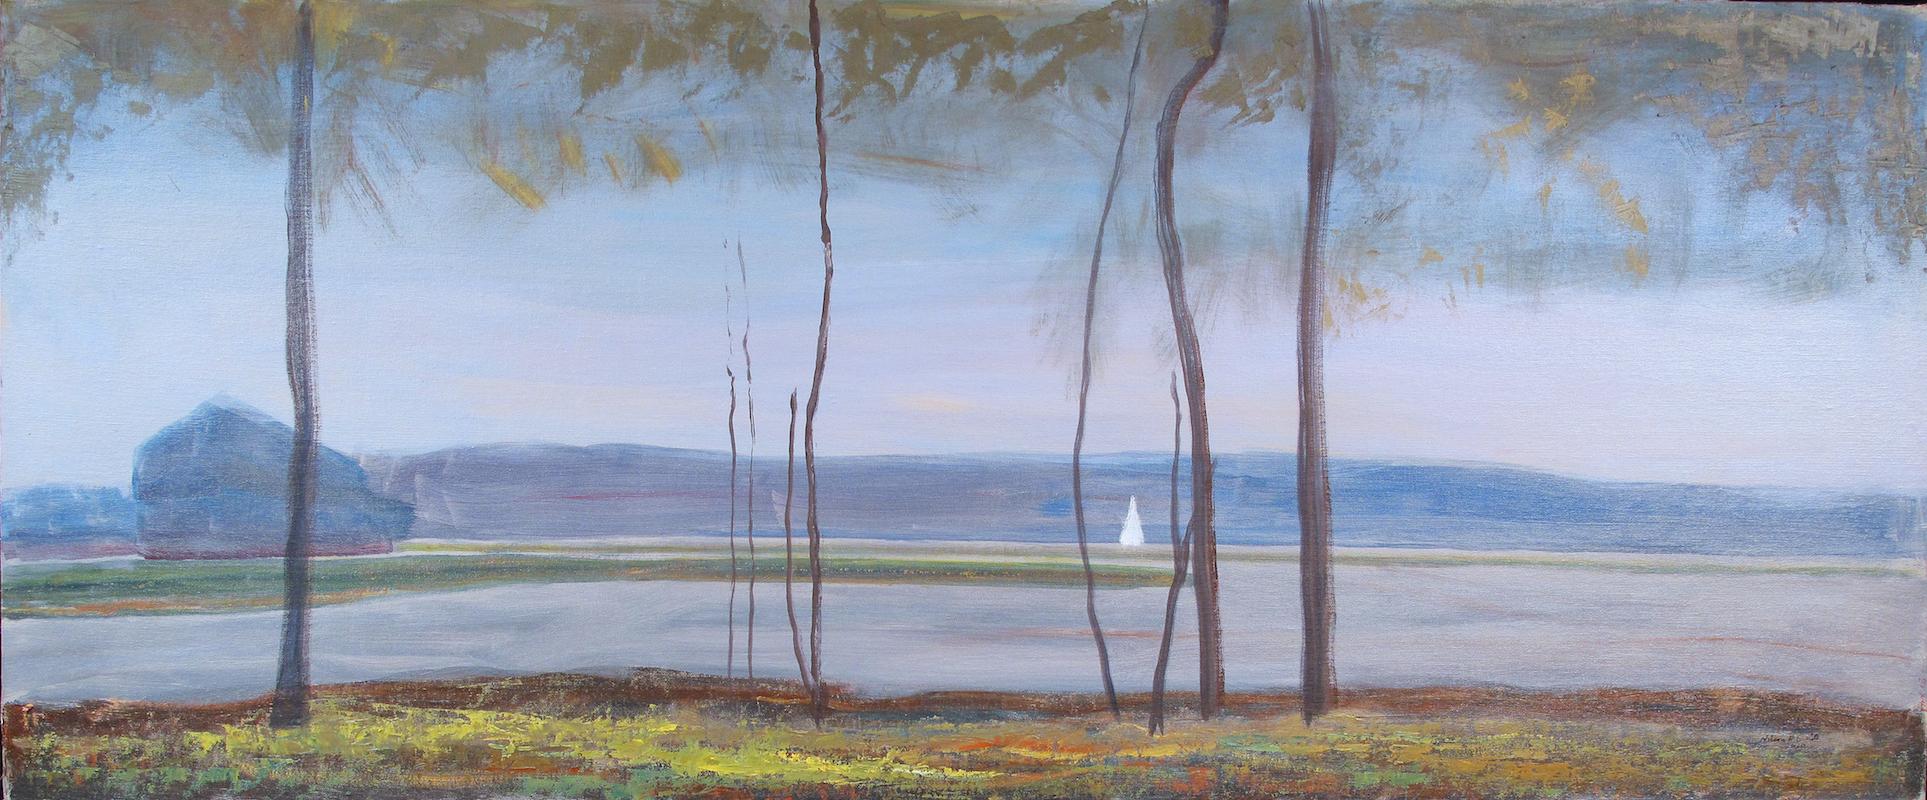 Landscape Painting Nelson White - The Woods Shelter Island 09.29.2020